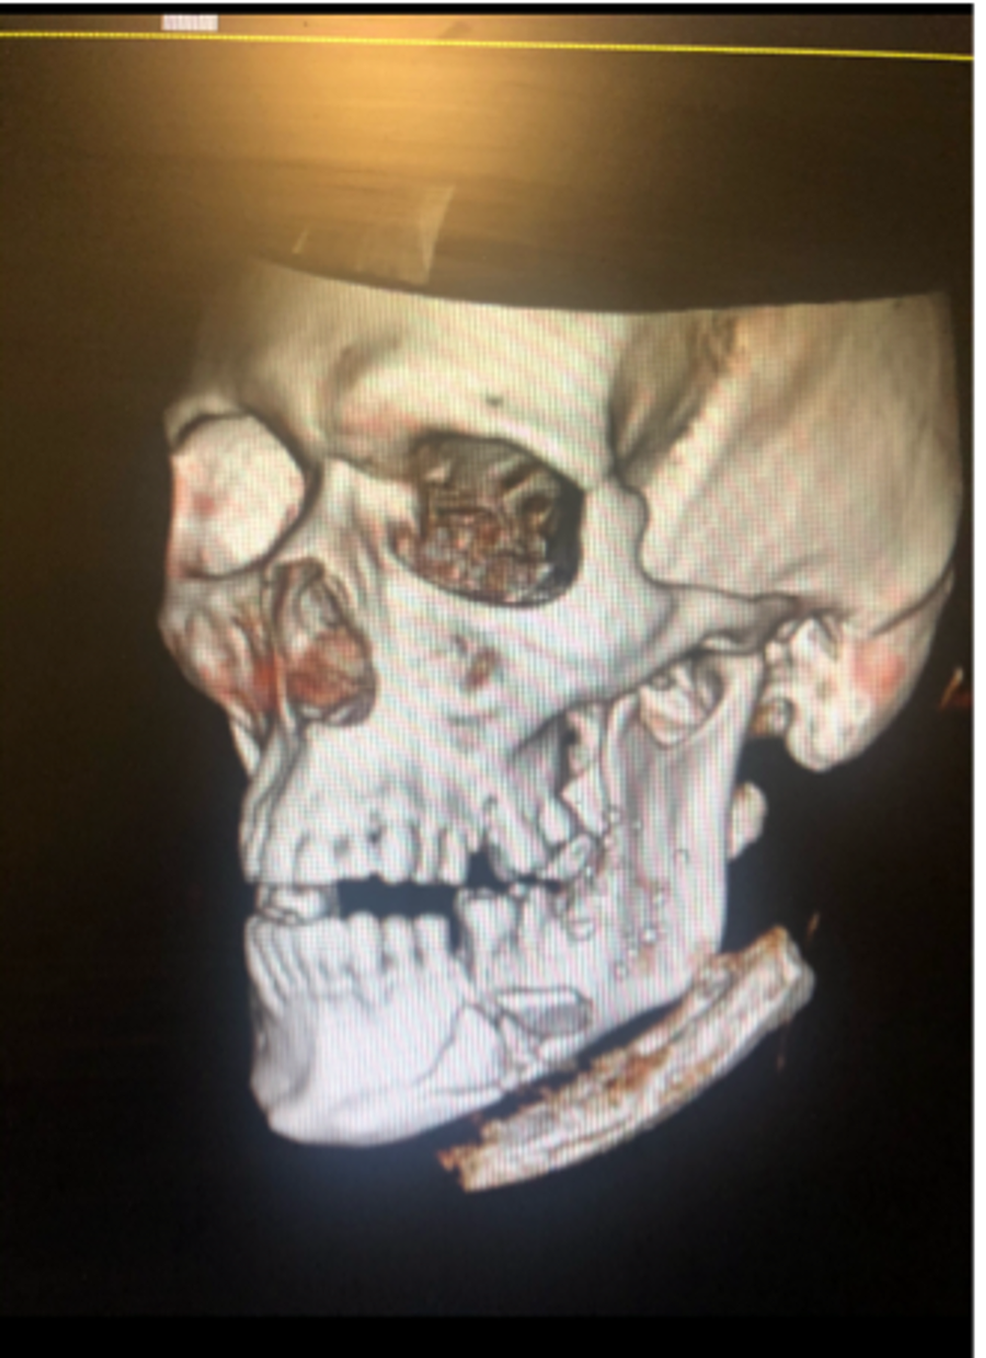 Maxillofacial-CT-scan-demonstrating-left-mandible-fracture.